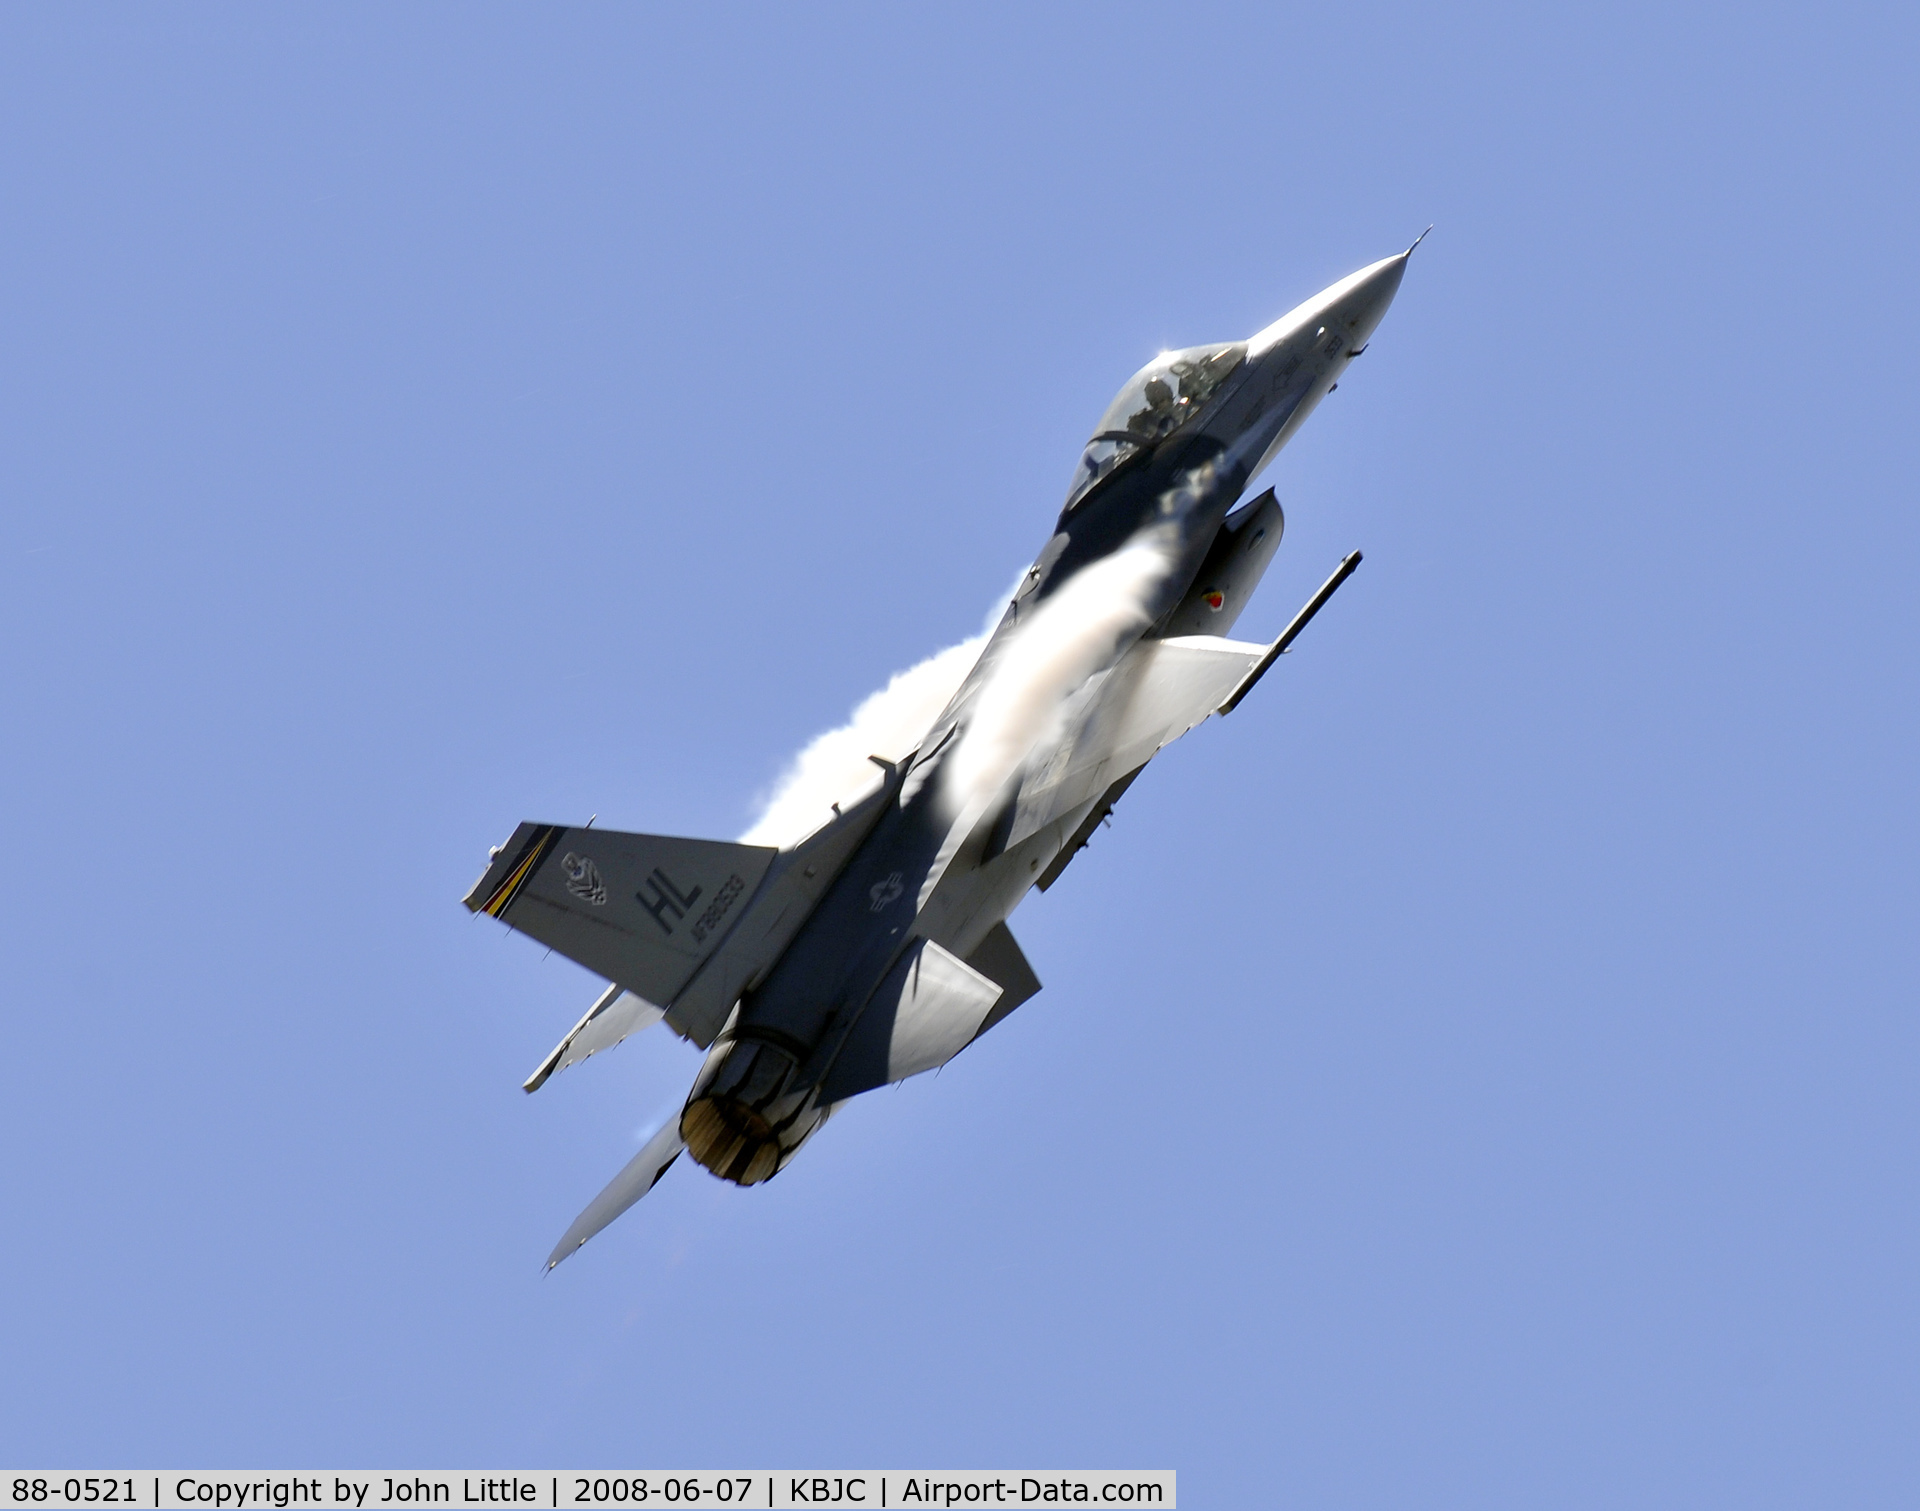 88-0521, 1988 General Dynamics F-16CG Night Falcon C/N 1C-123, F-16 picking up the speed